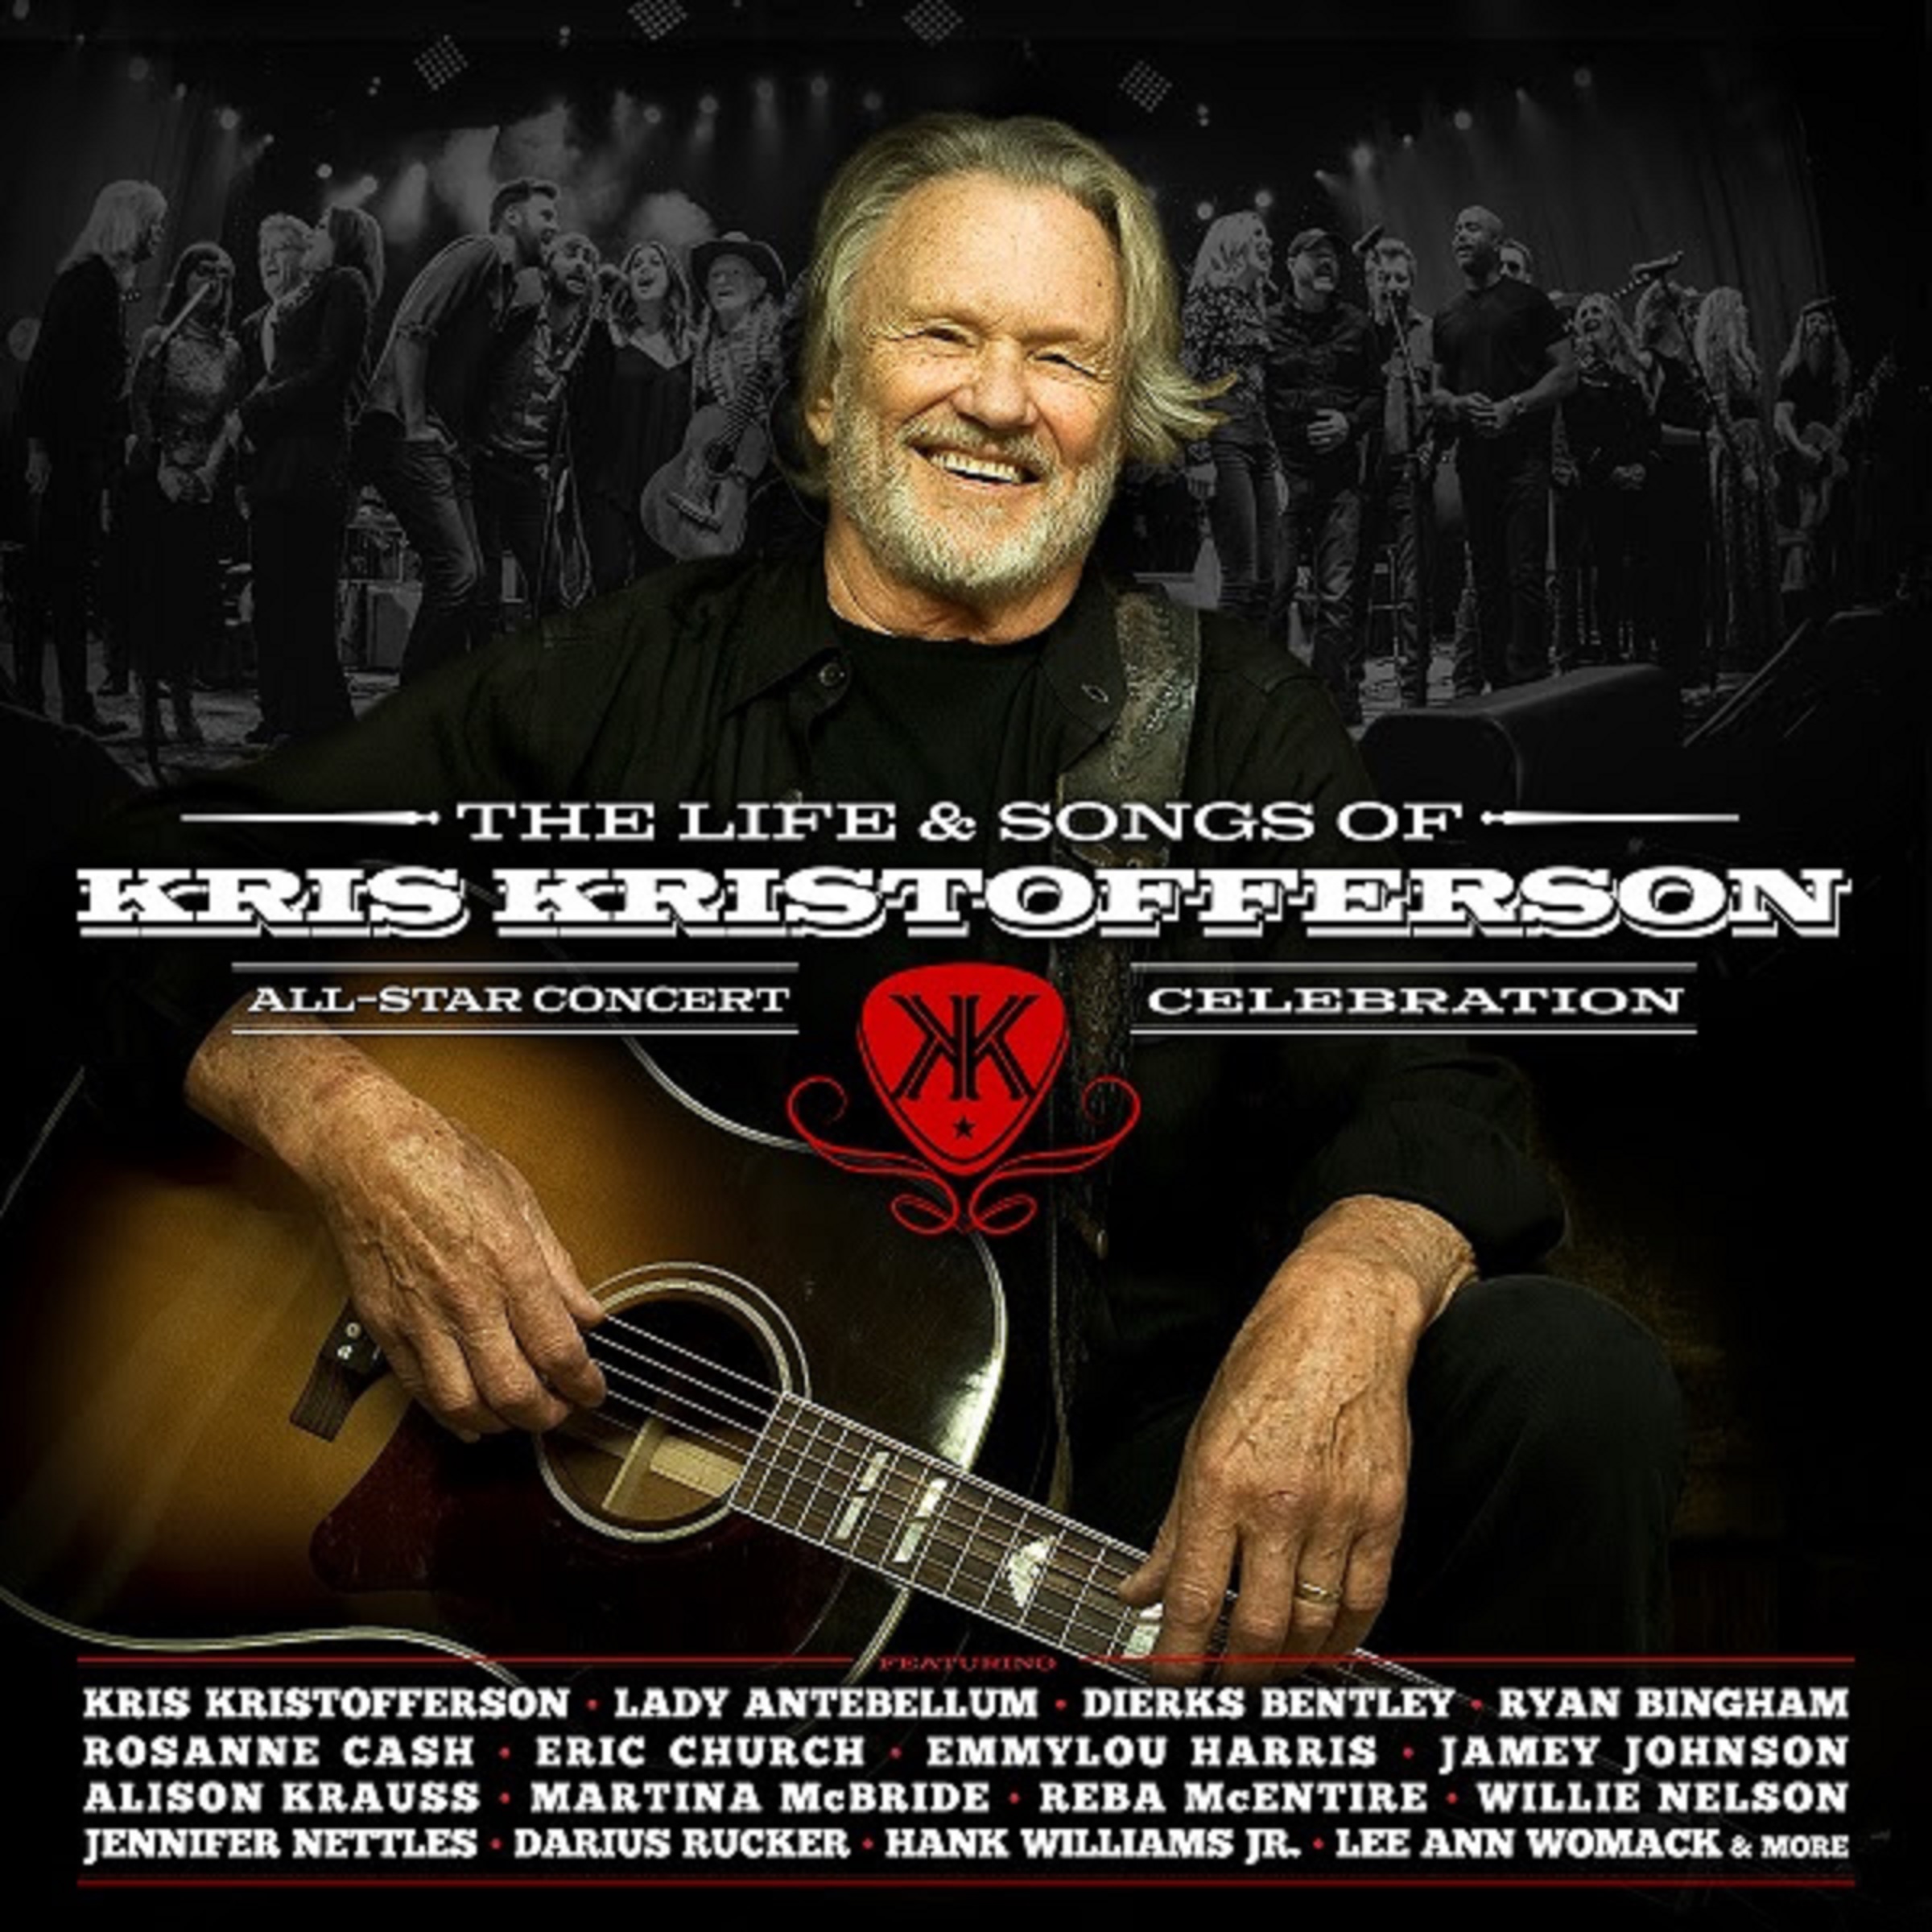 Kris Kristofferson in 'The Life & Songs of Kris Kristofferson'